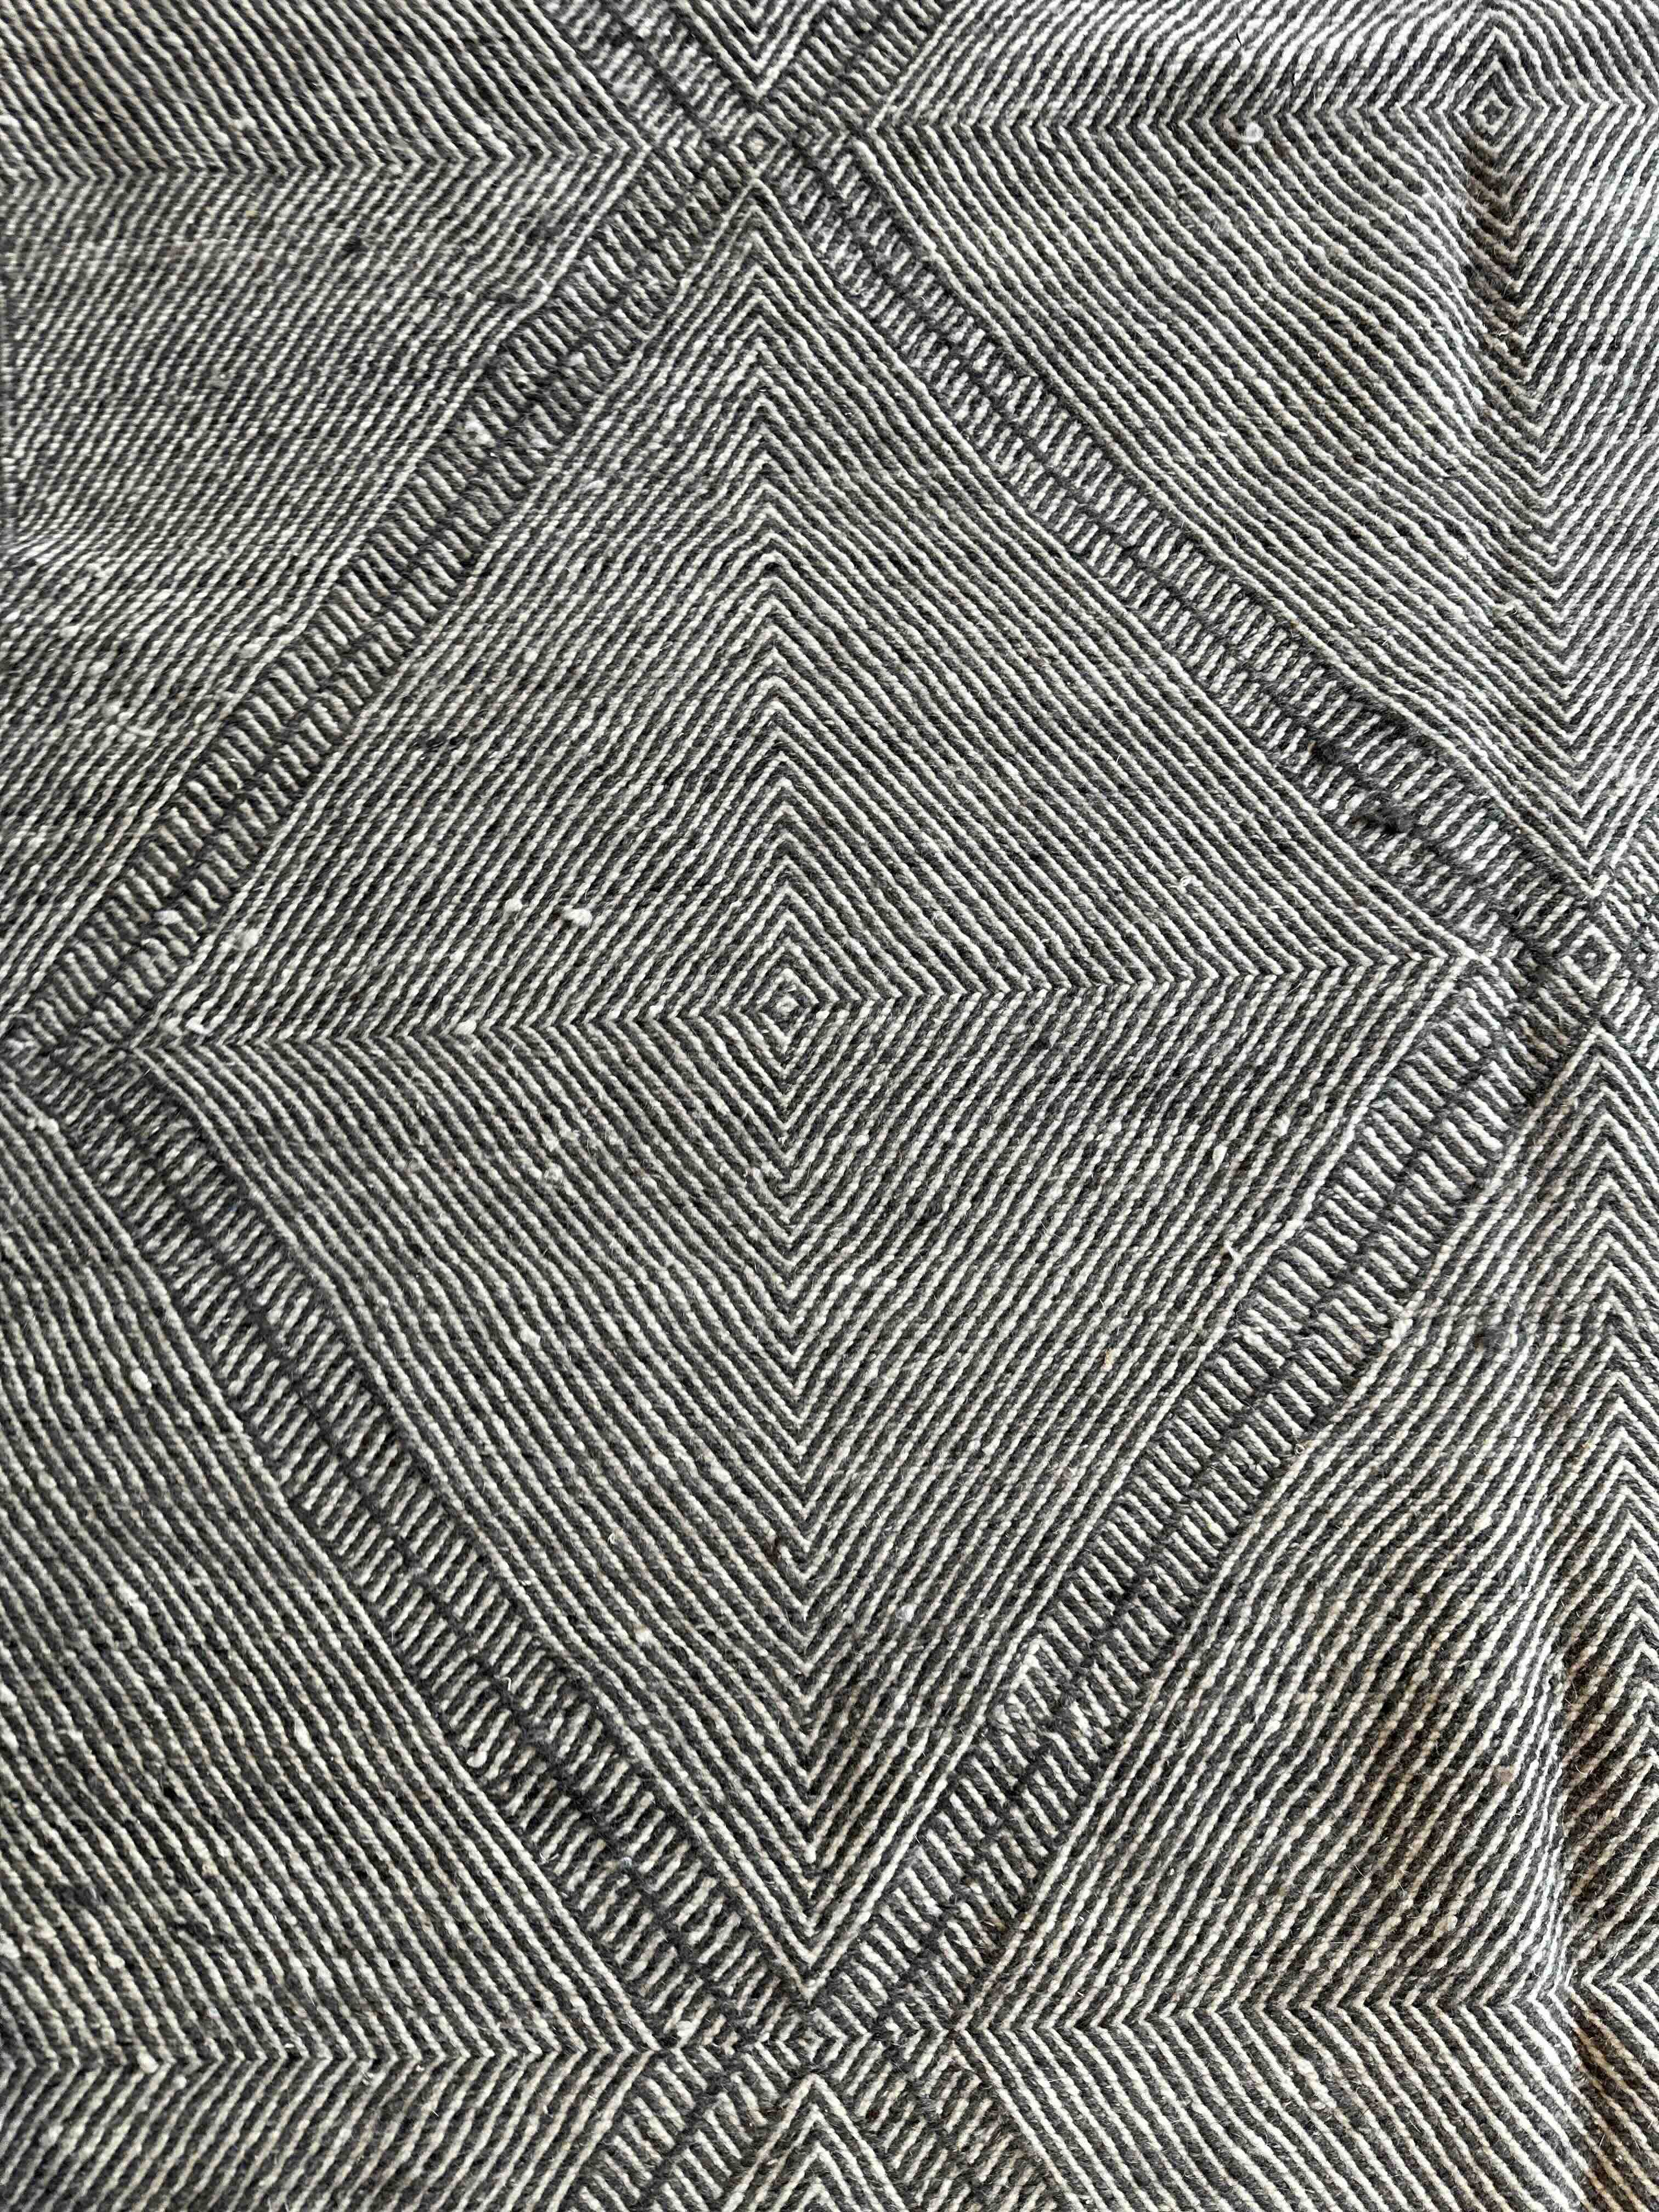 Marrokansk uld gulvtæppe i Sort og Grå farver.